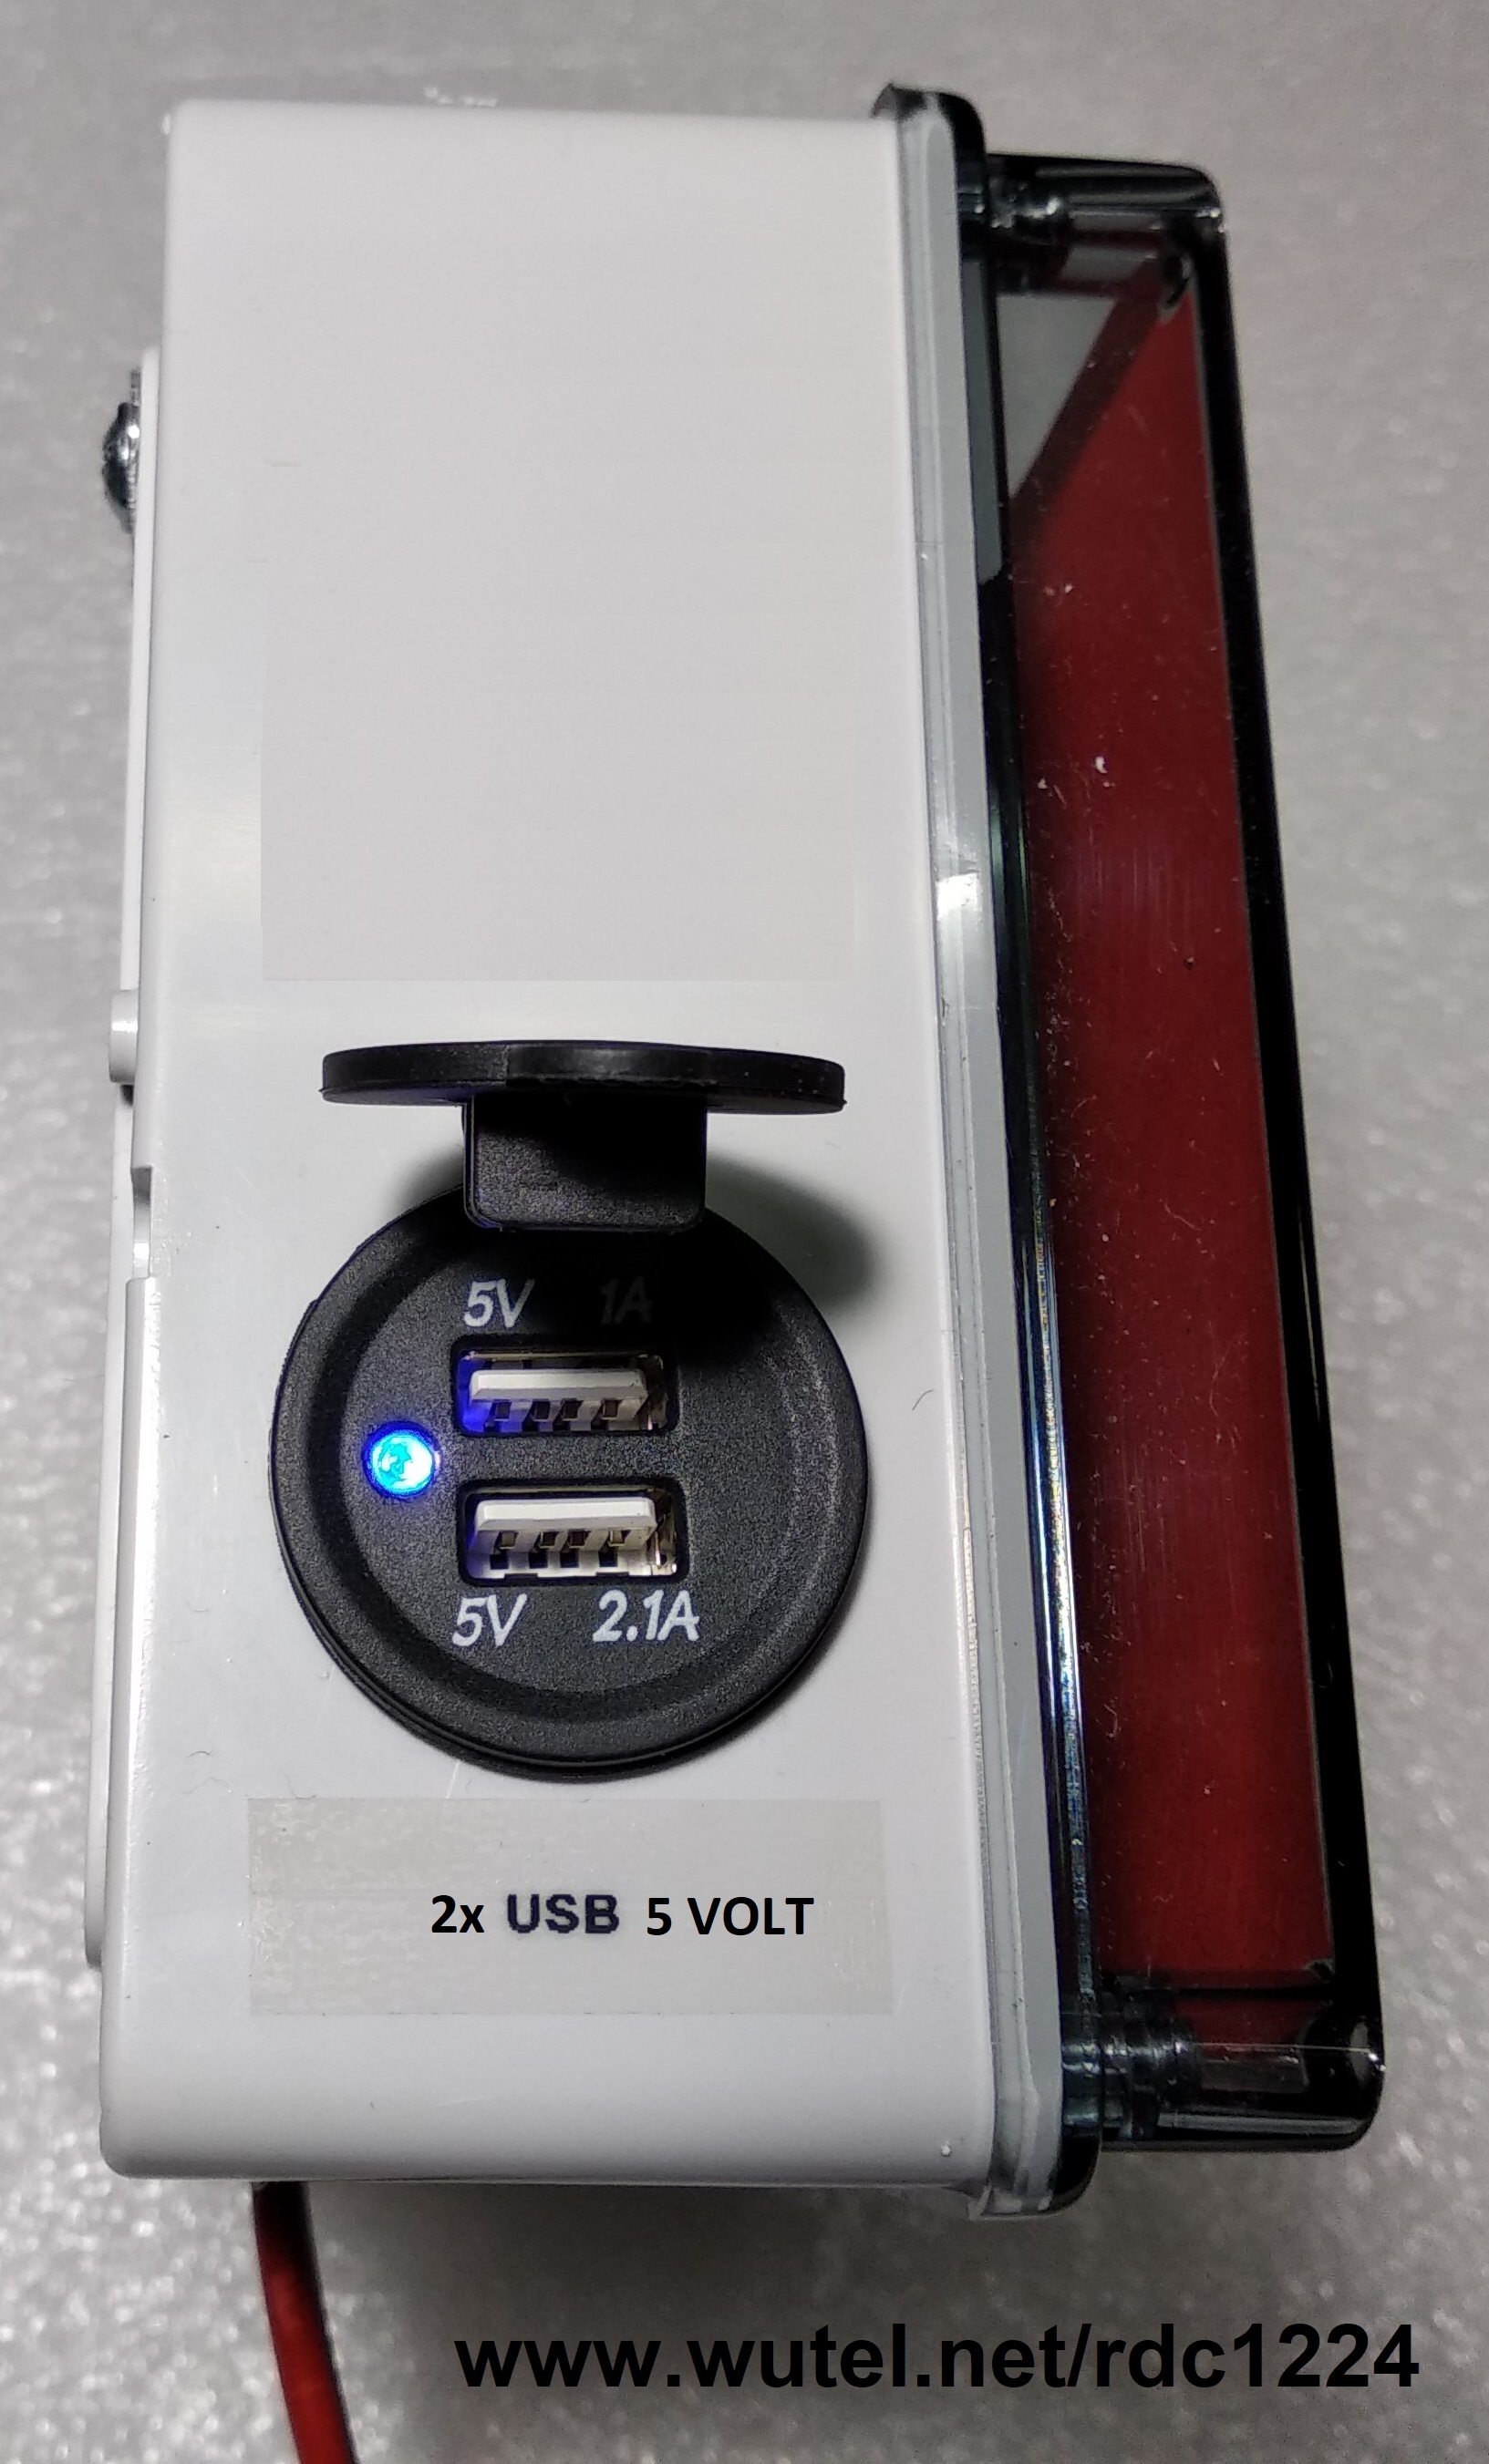 rdc1224 vista connettore USB